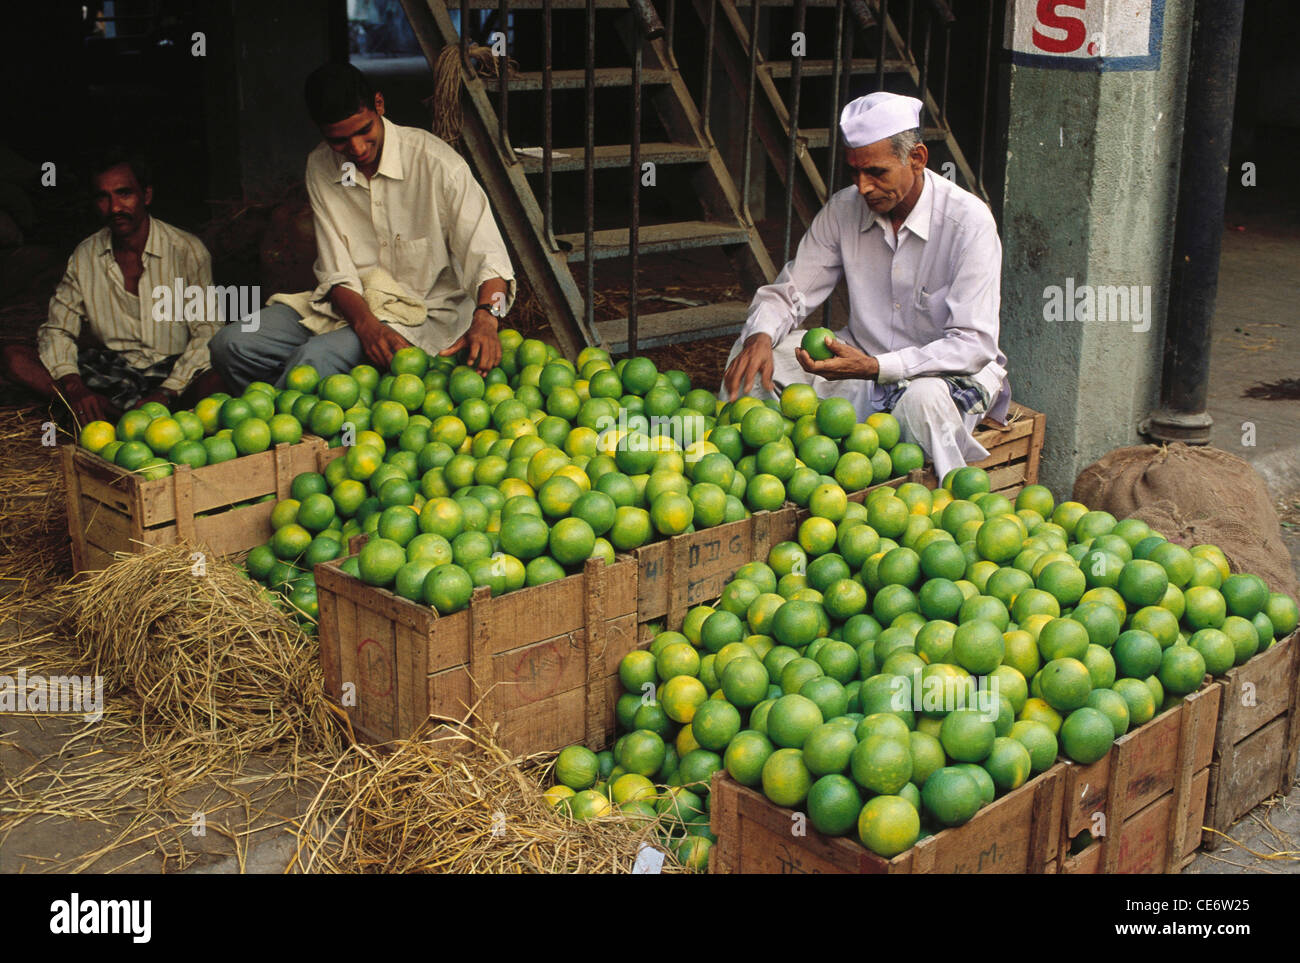 HMA 85242: Sweetlime Obst-Verkäufer im Großhandel Markt Vashi Navi Mumbai Maharashtra Indien Stockfoto